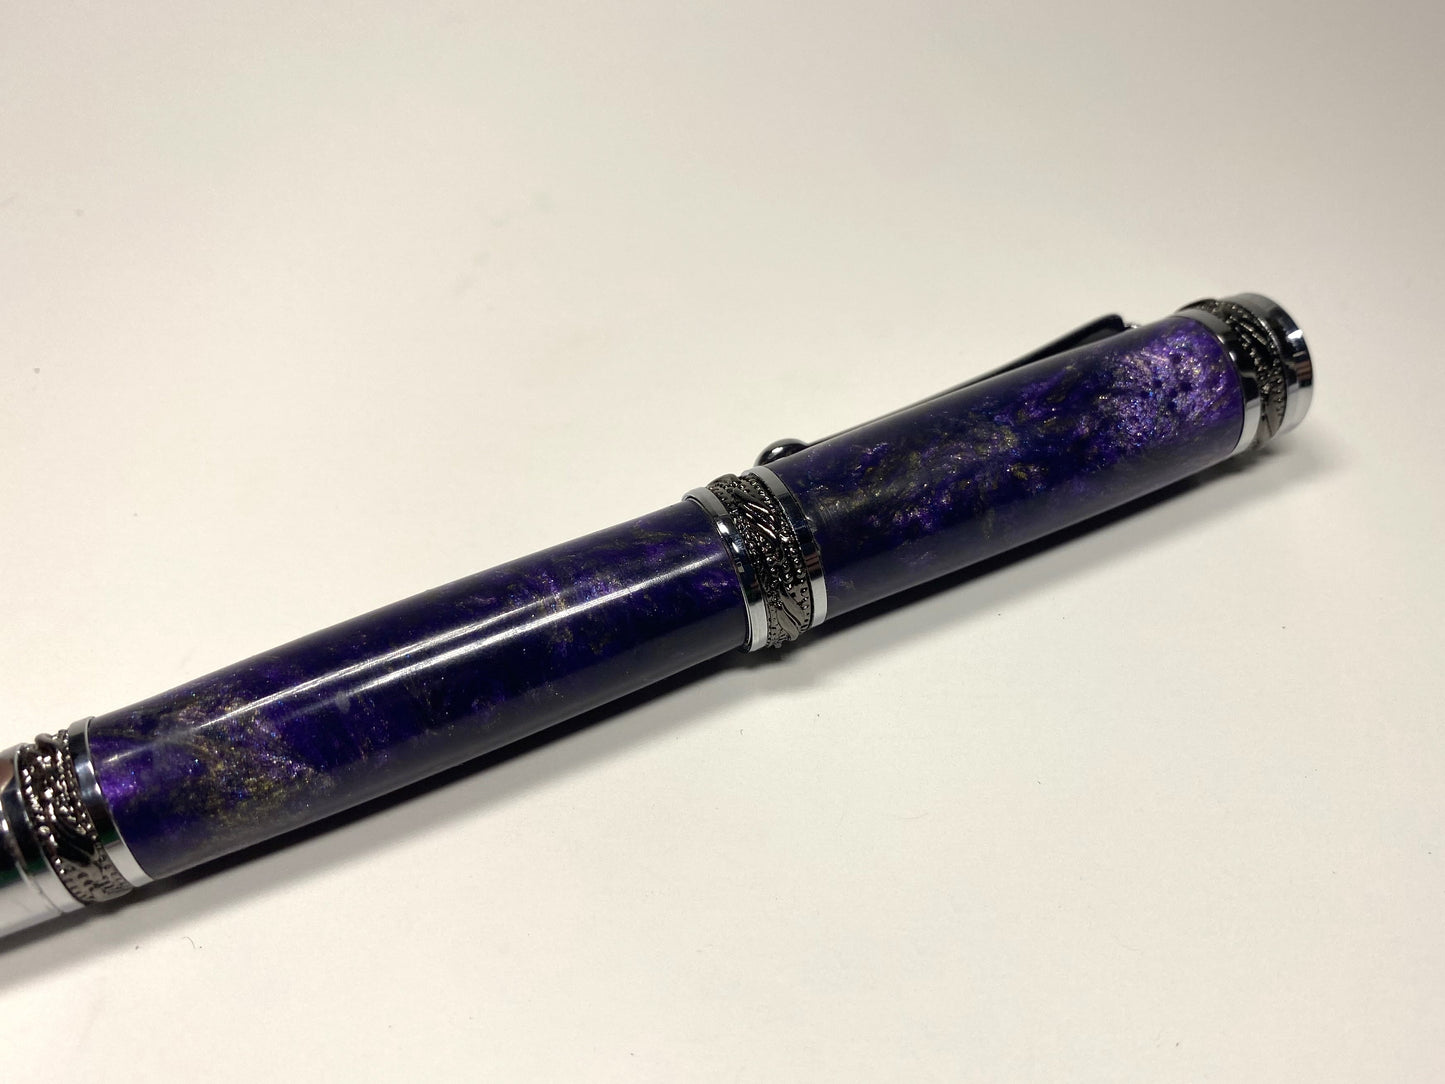 Majestic Purple Midnight Fountain Pen with Swarovski Crystal